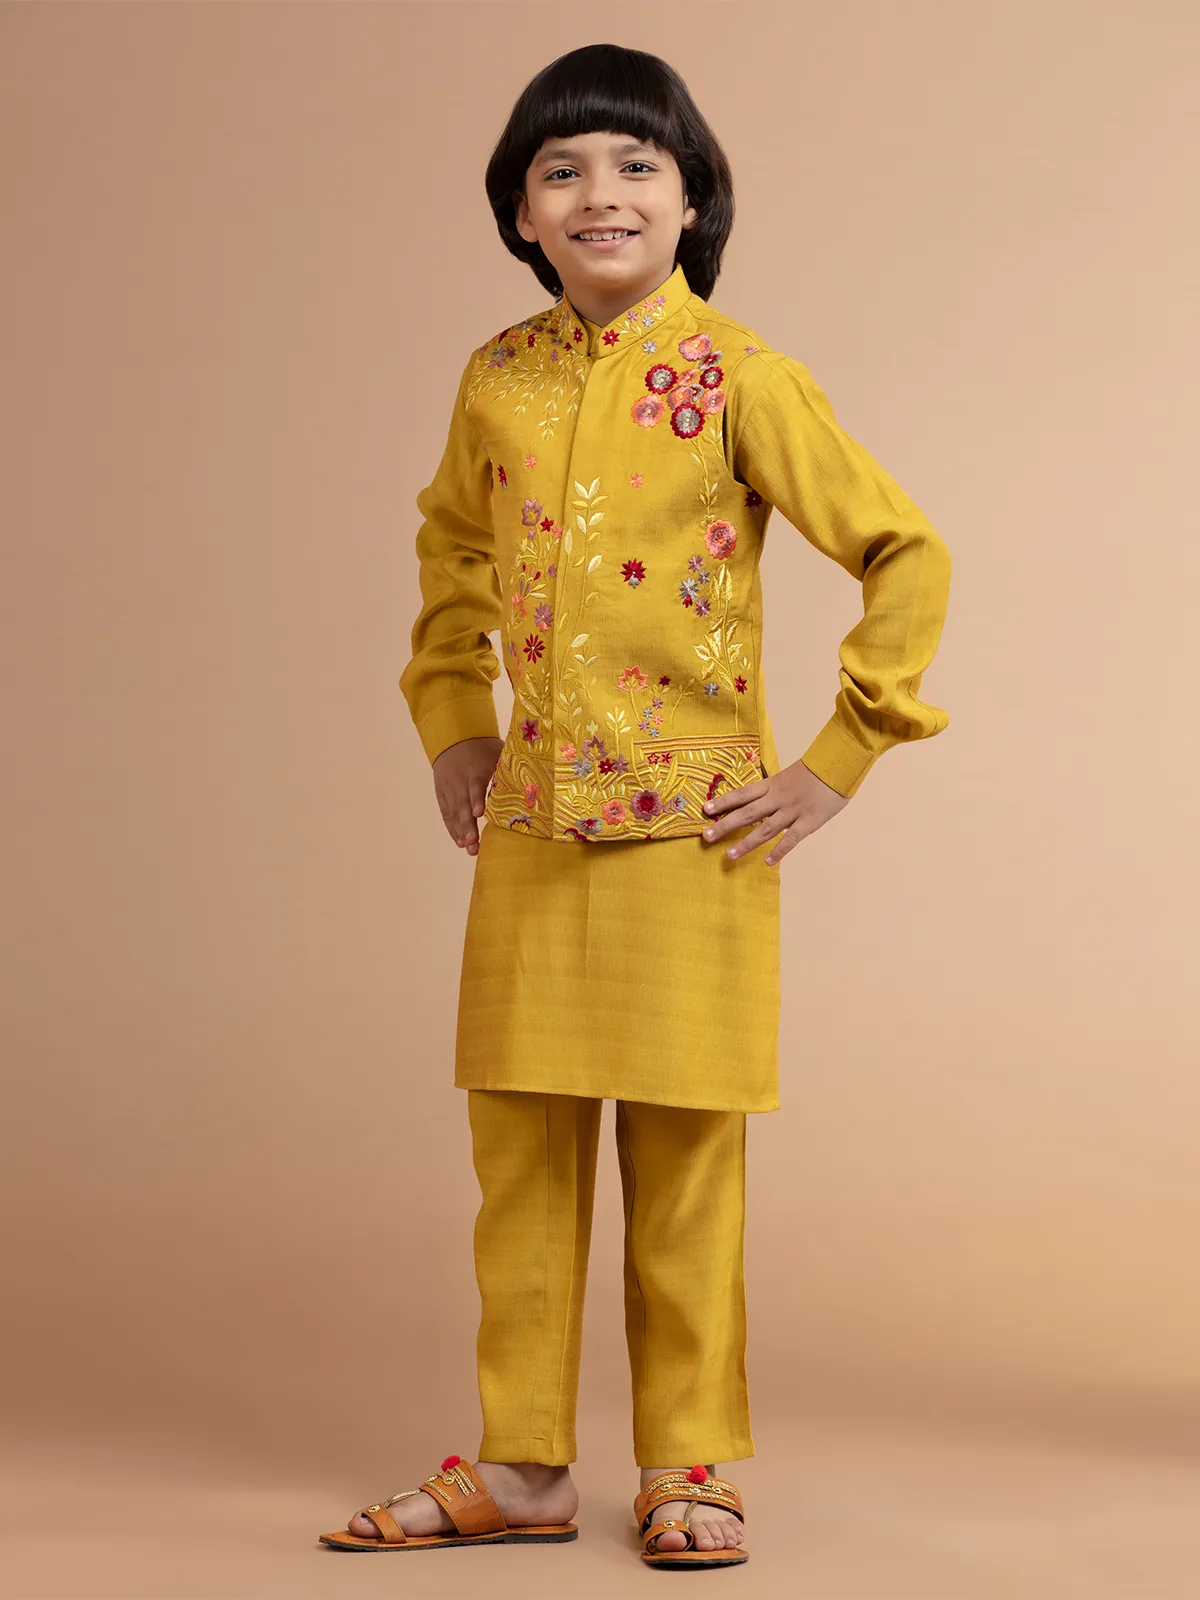 Haldi look mustard yellow waistcoat set